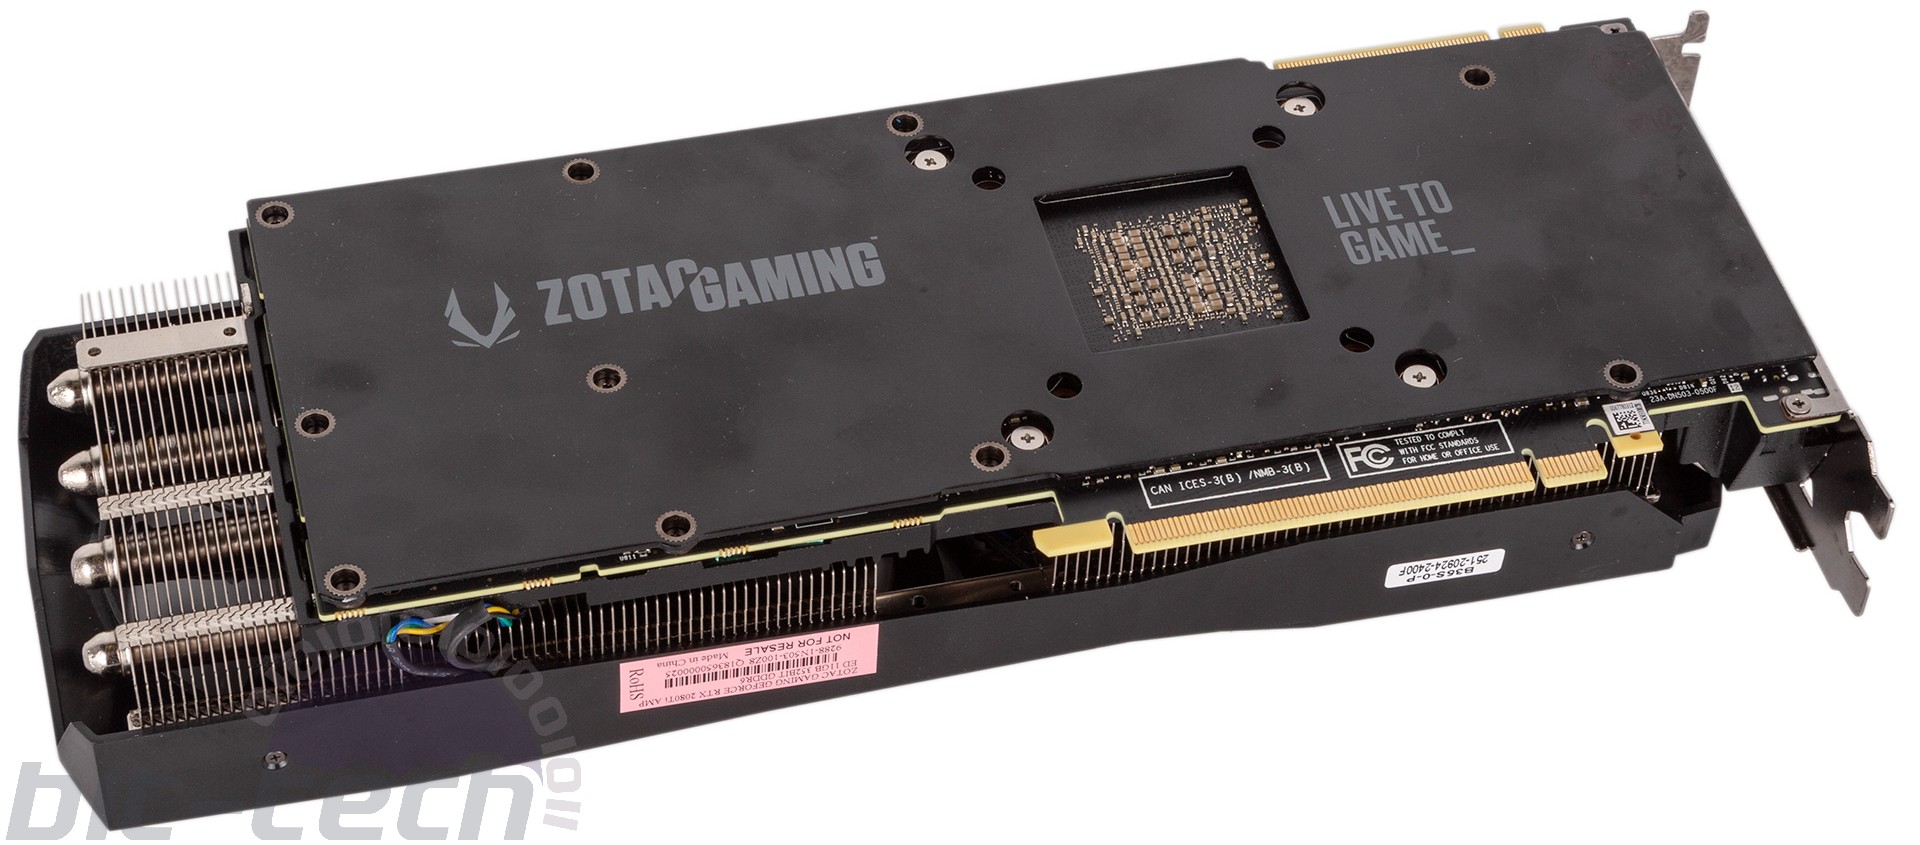 NVIDIA RTX 2080 Ti, 11GB GDDDR6, 352bit, Boost-Takt 1665 MHz, 14 GHz Zotac Gaming GeForce RTX 2080 Ti AMP Grafikkarte 